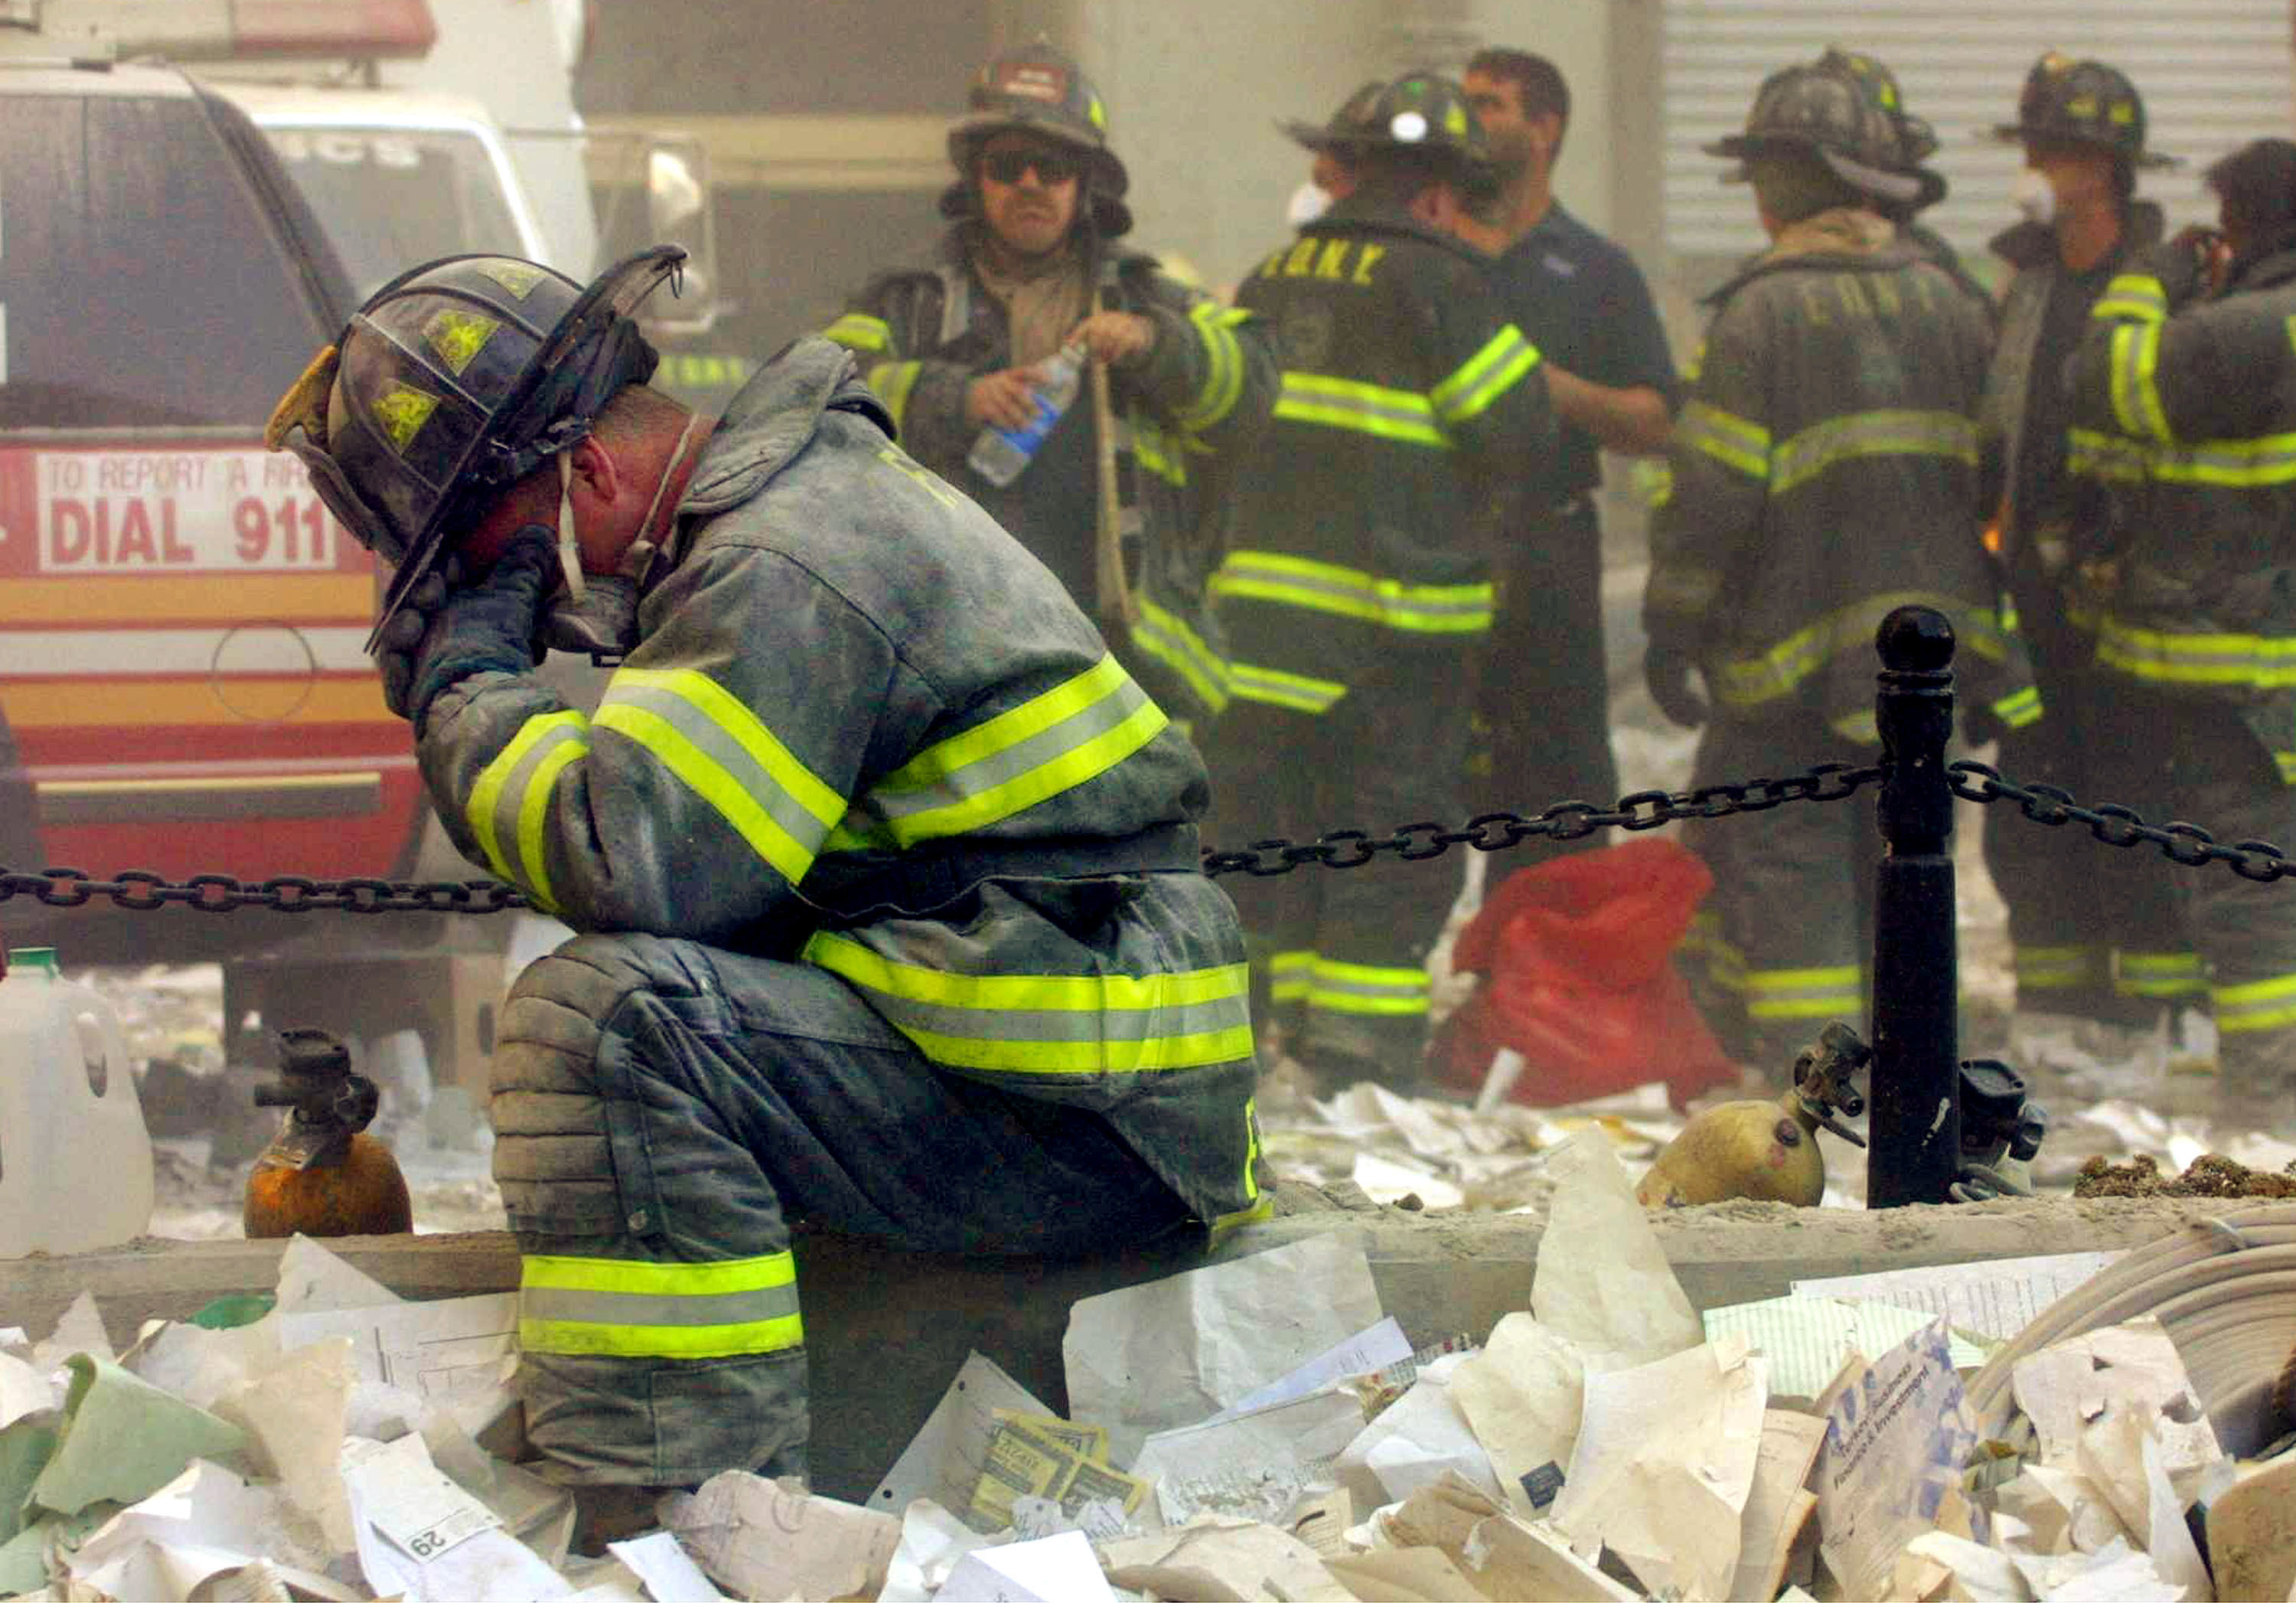 9 11 firefighter art